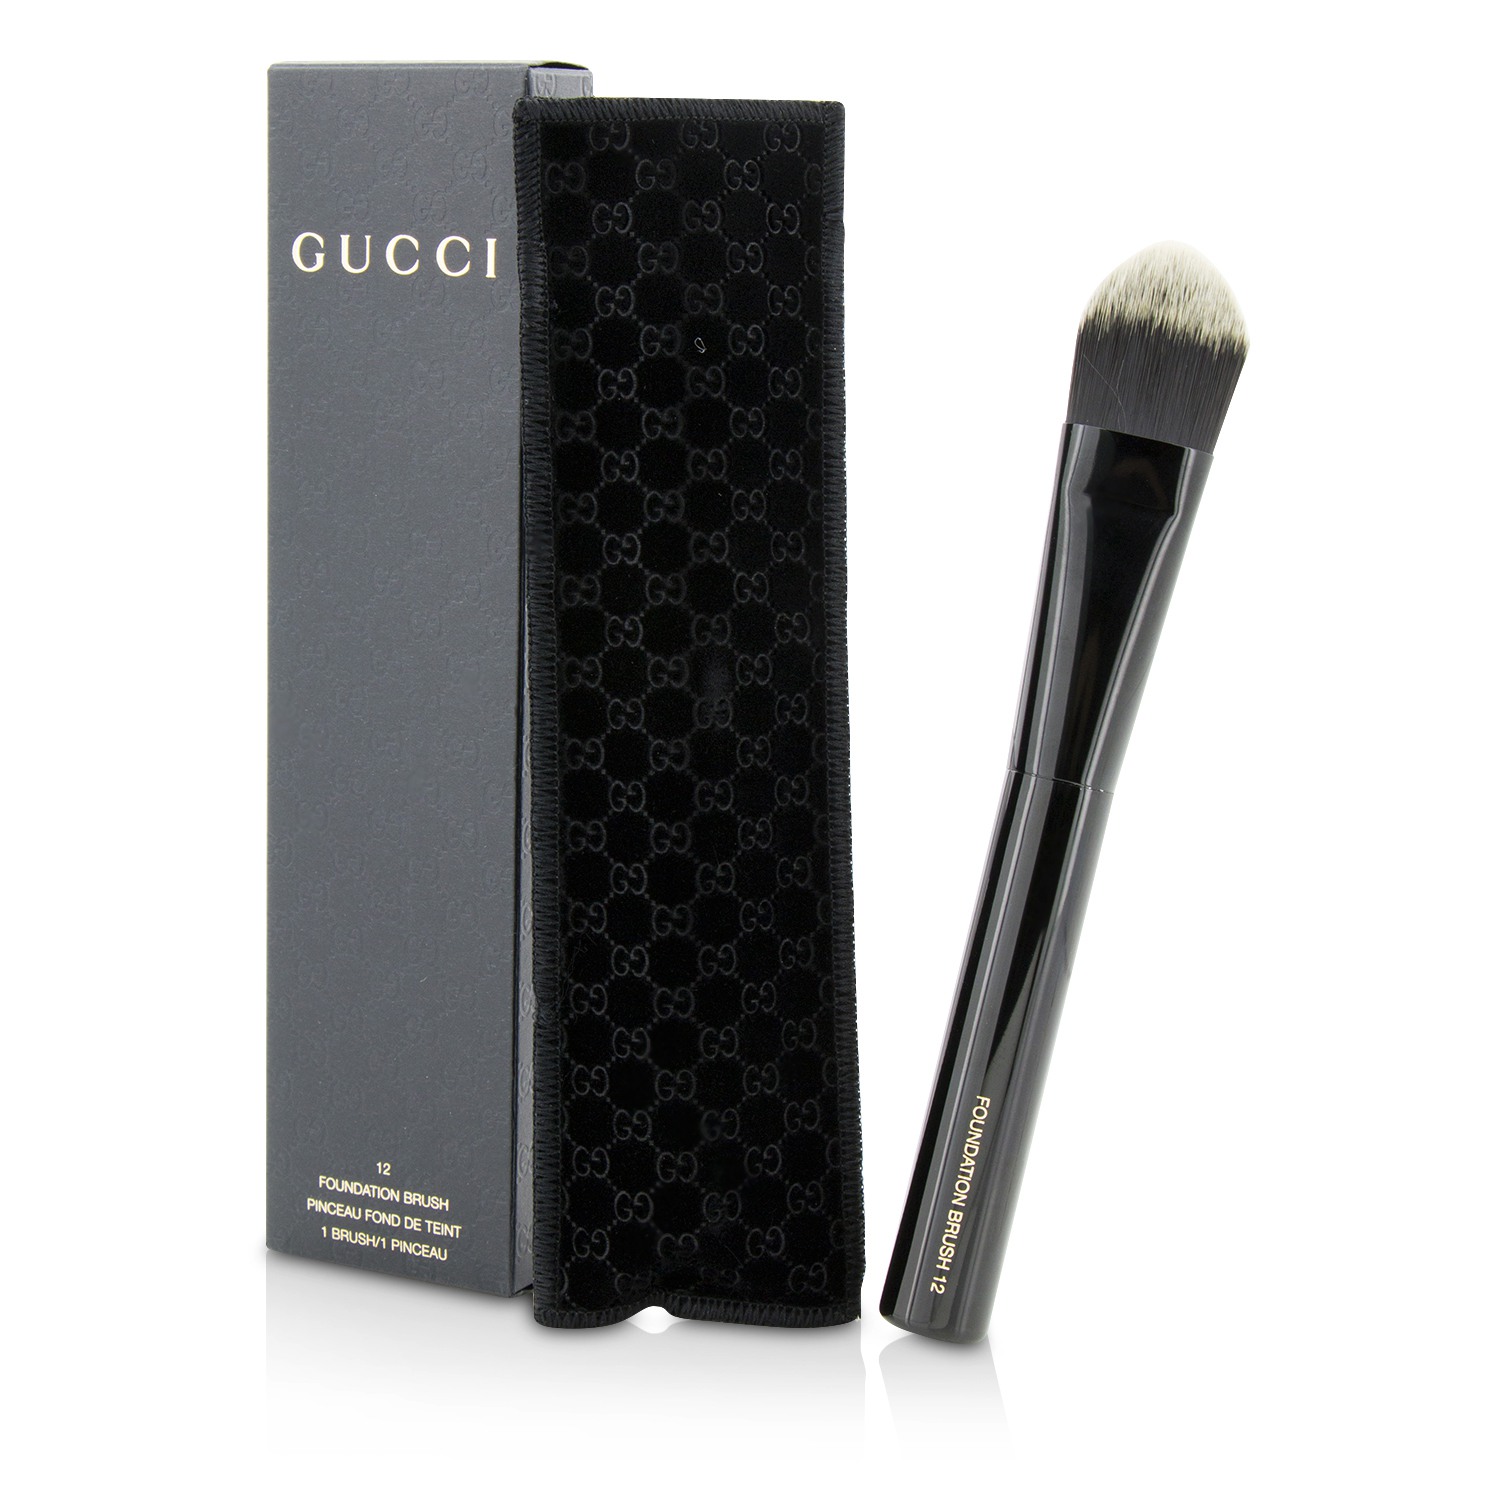 Buiten adem cache Wereldrecord Guinness Book Foundation Brush 12 by Gucci @ Perfume Emporium Make Up